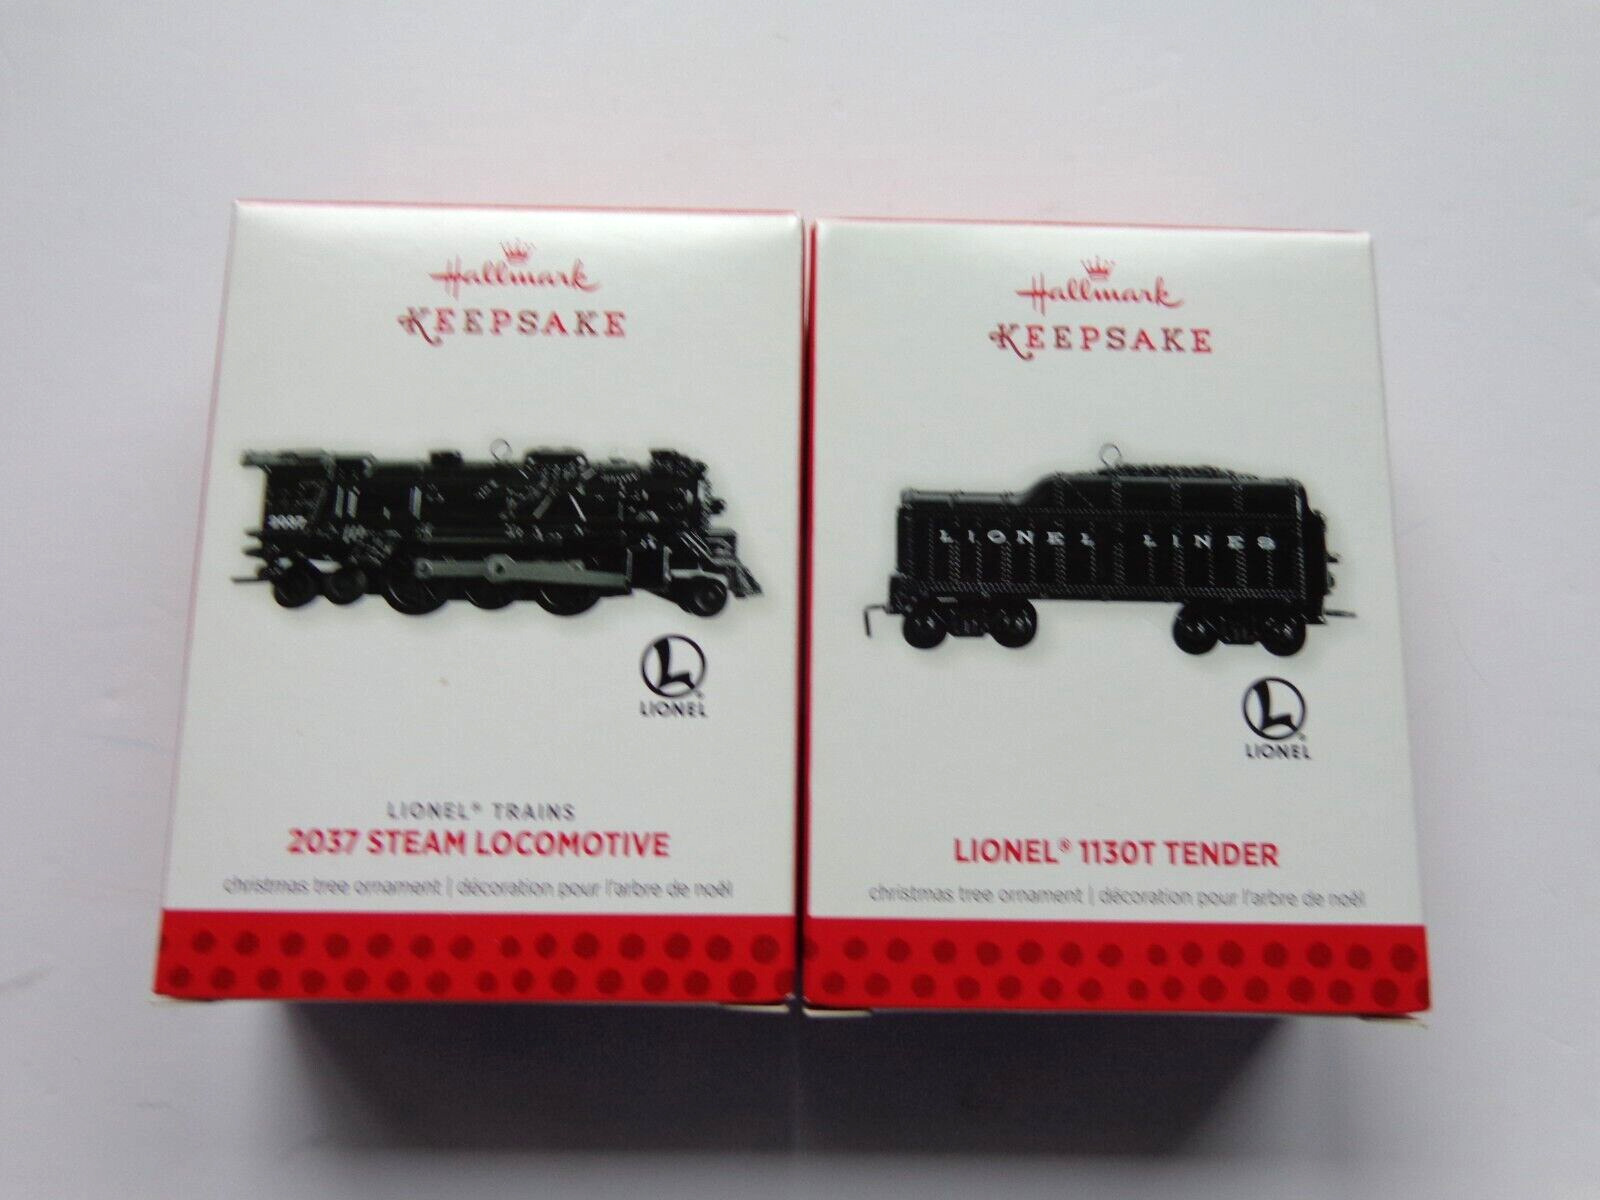 Vintage 2 Pc Lot Hallmark Keepsake Lionel Train Ornaments Pre-Owned w/Boxes #4